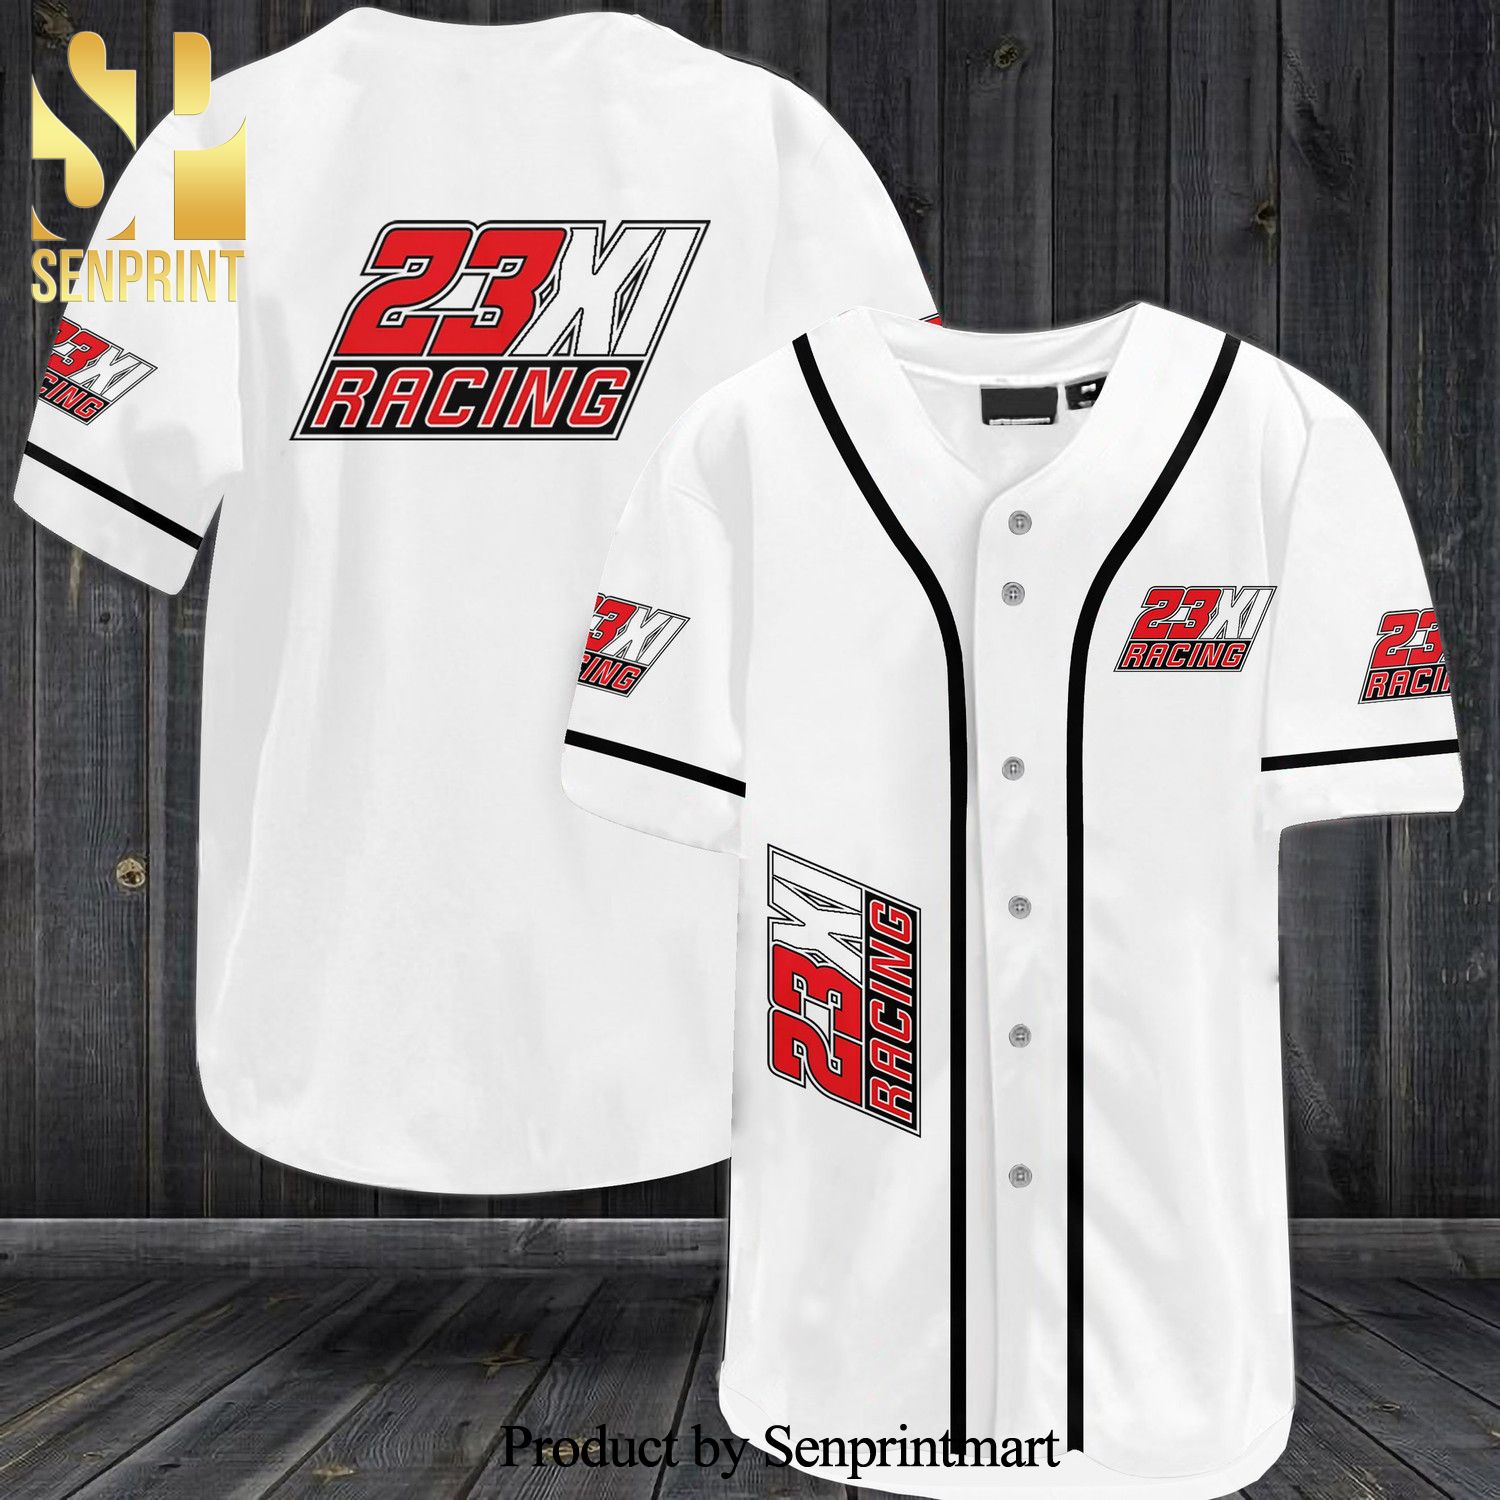 23XI Racing All Over Print Baseball Jersey – White